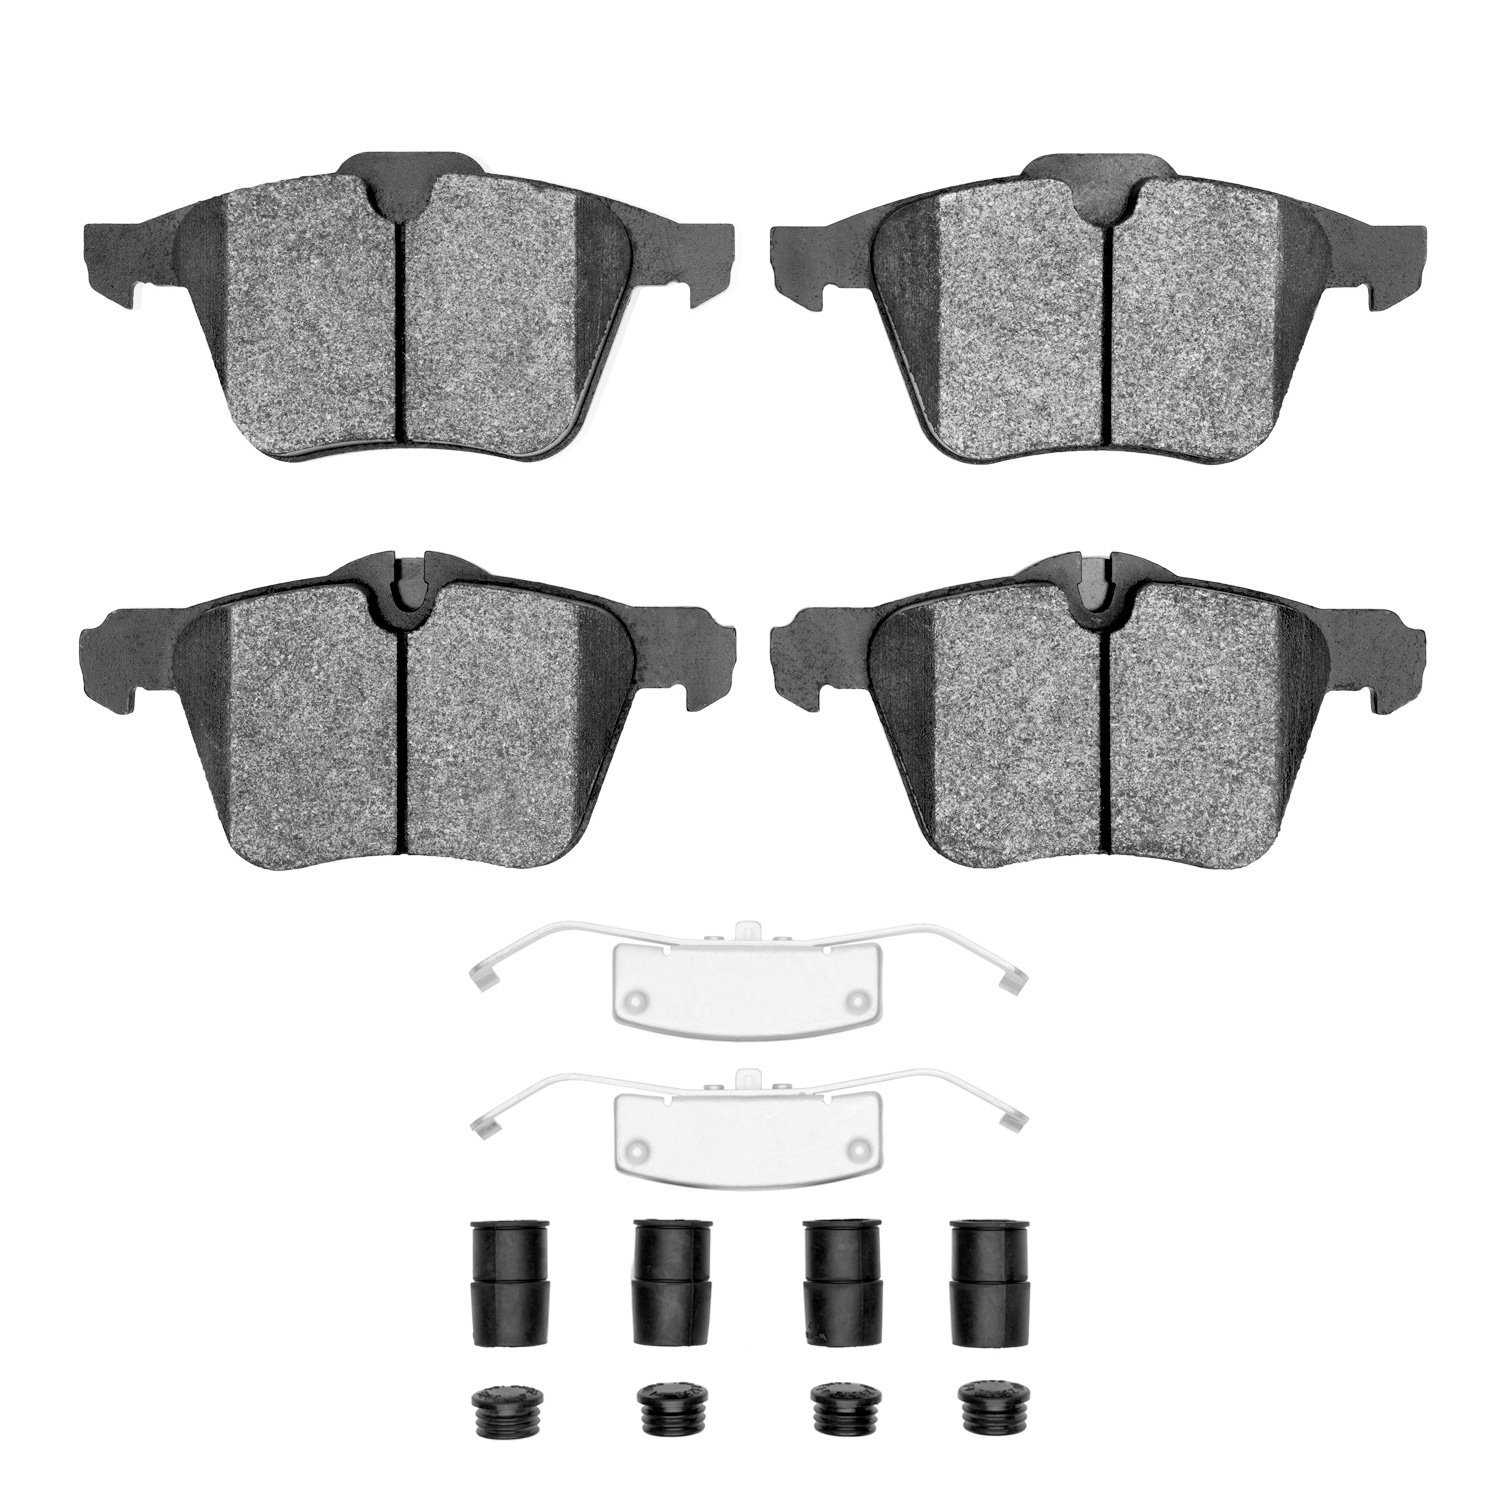 1600-1240-02 5000 Euro Ceramic Brake Pads & Hardware Kit, 2010-2019 Jaguar, Position: Front